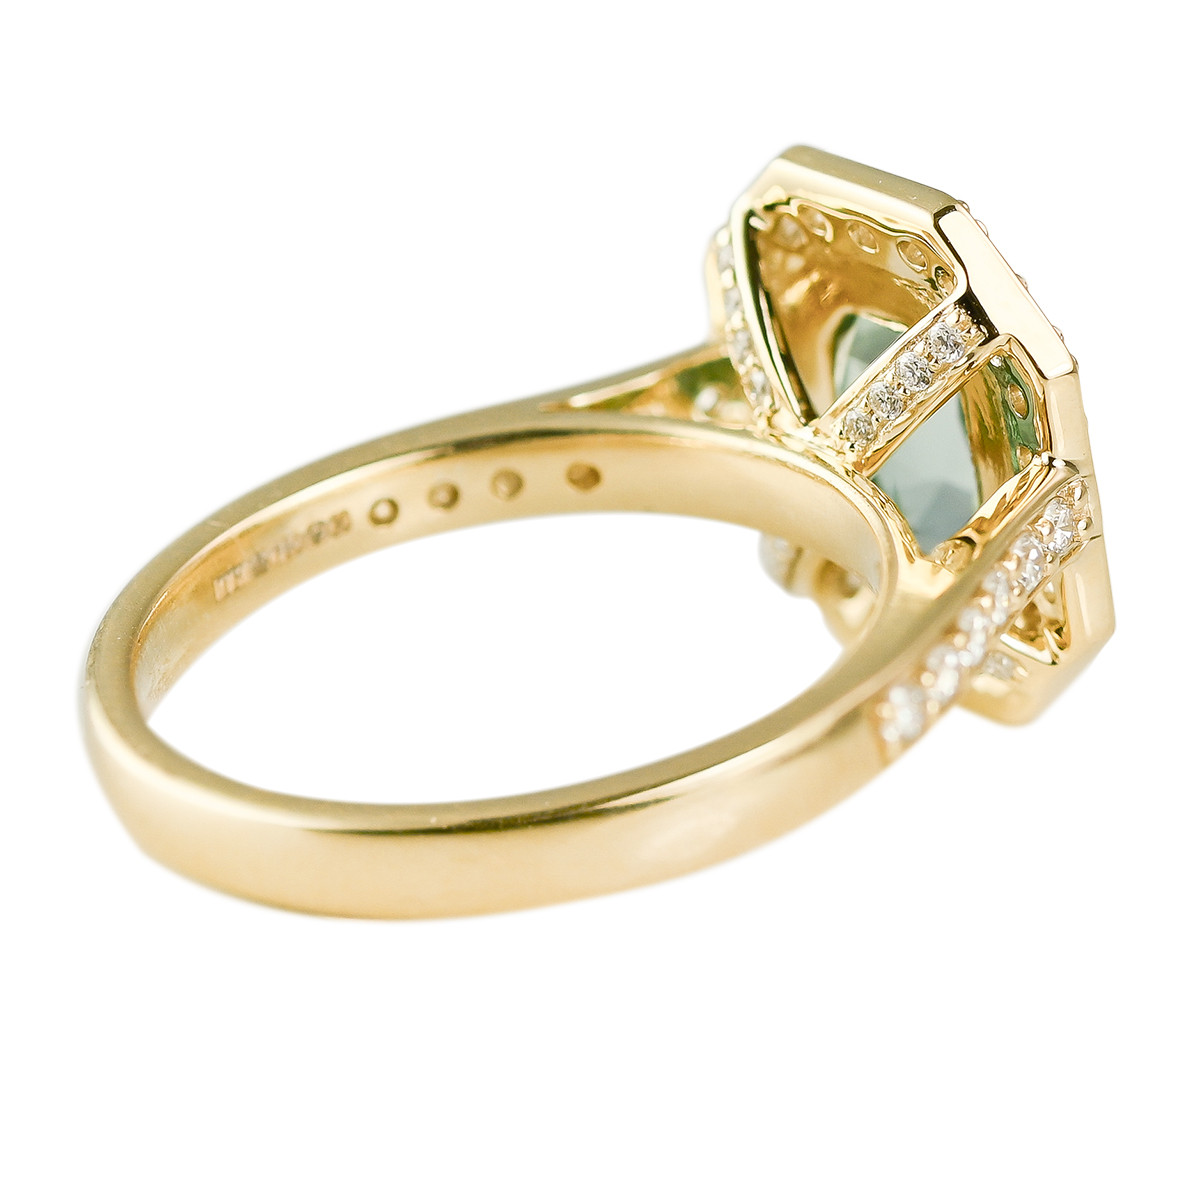 tf collective: 3.37ct Mint Tourmaline and Diamond Halo Ring, tomfoolery london